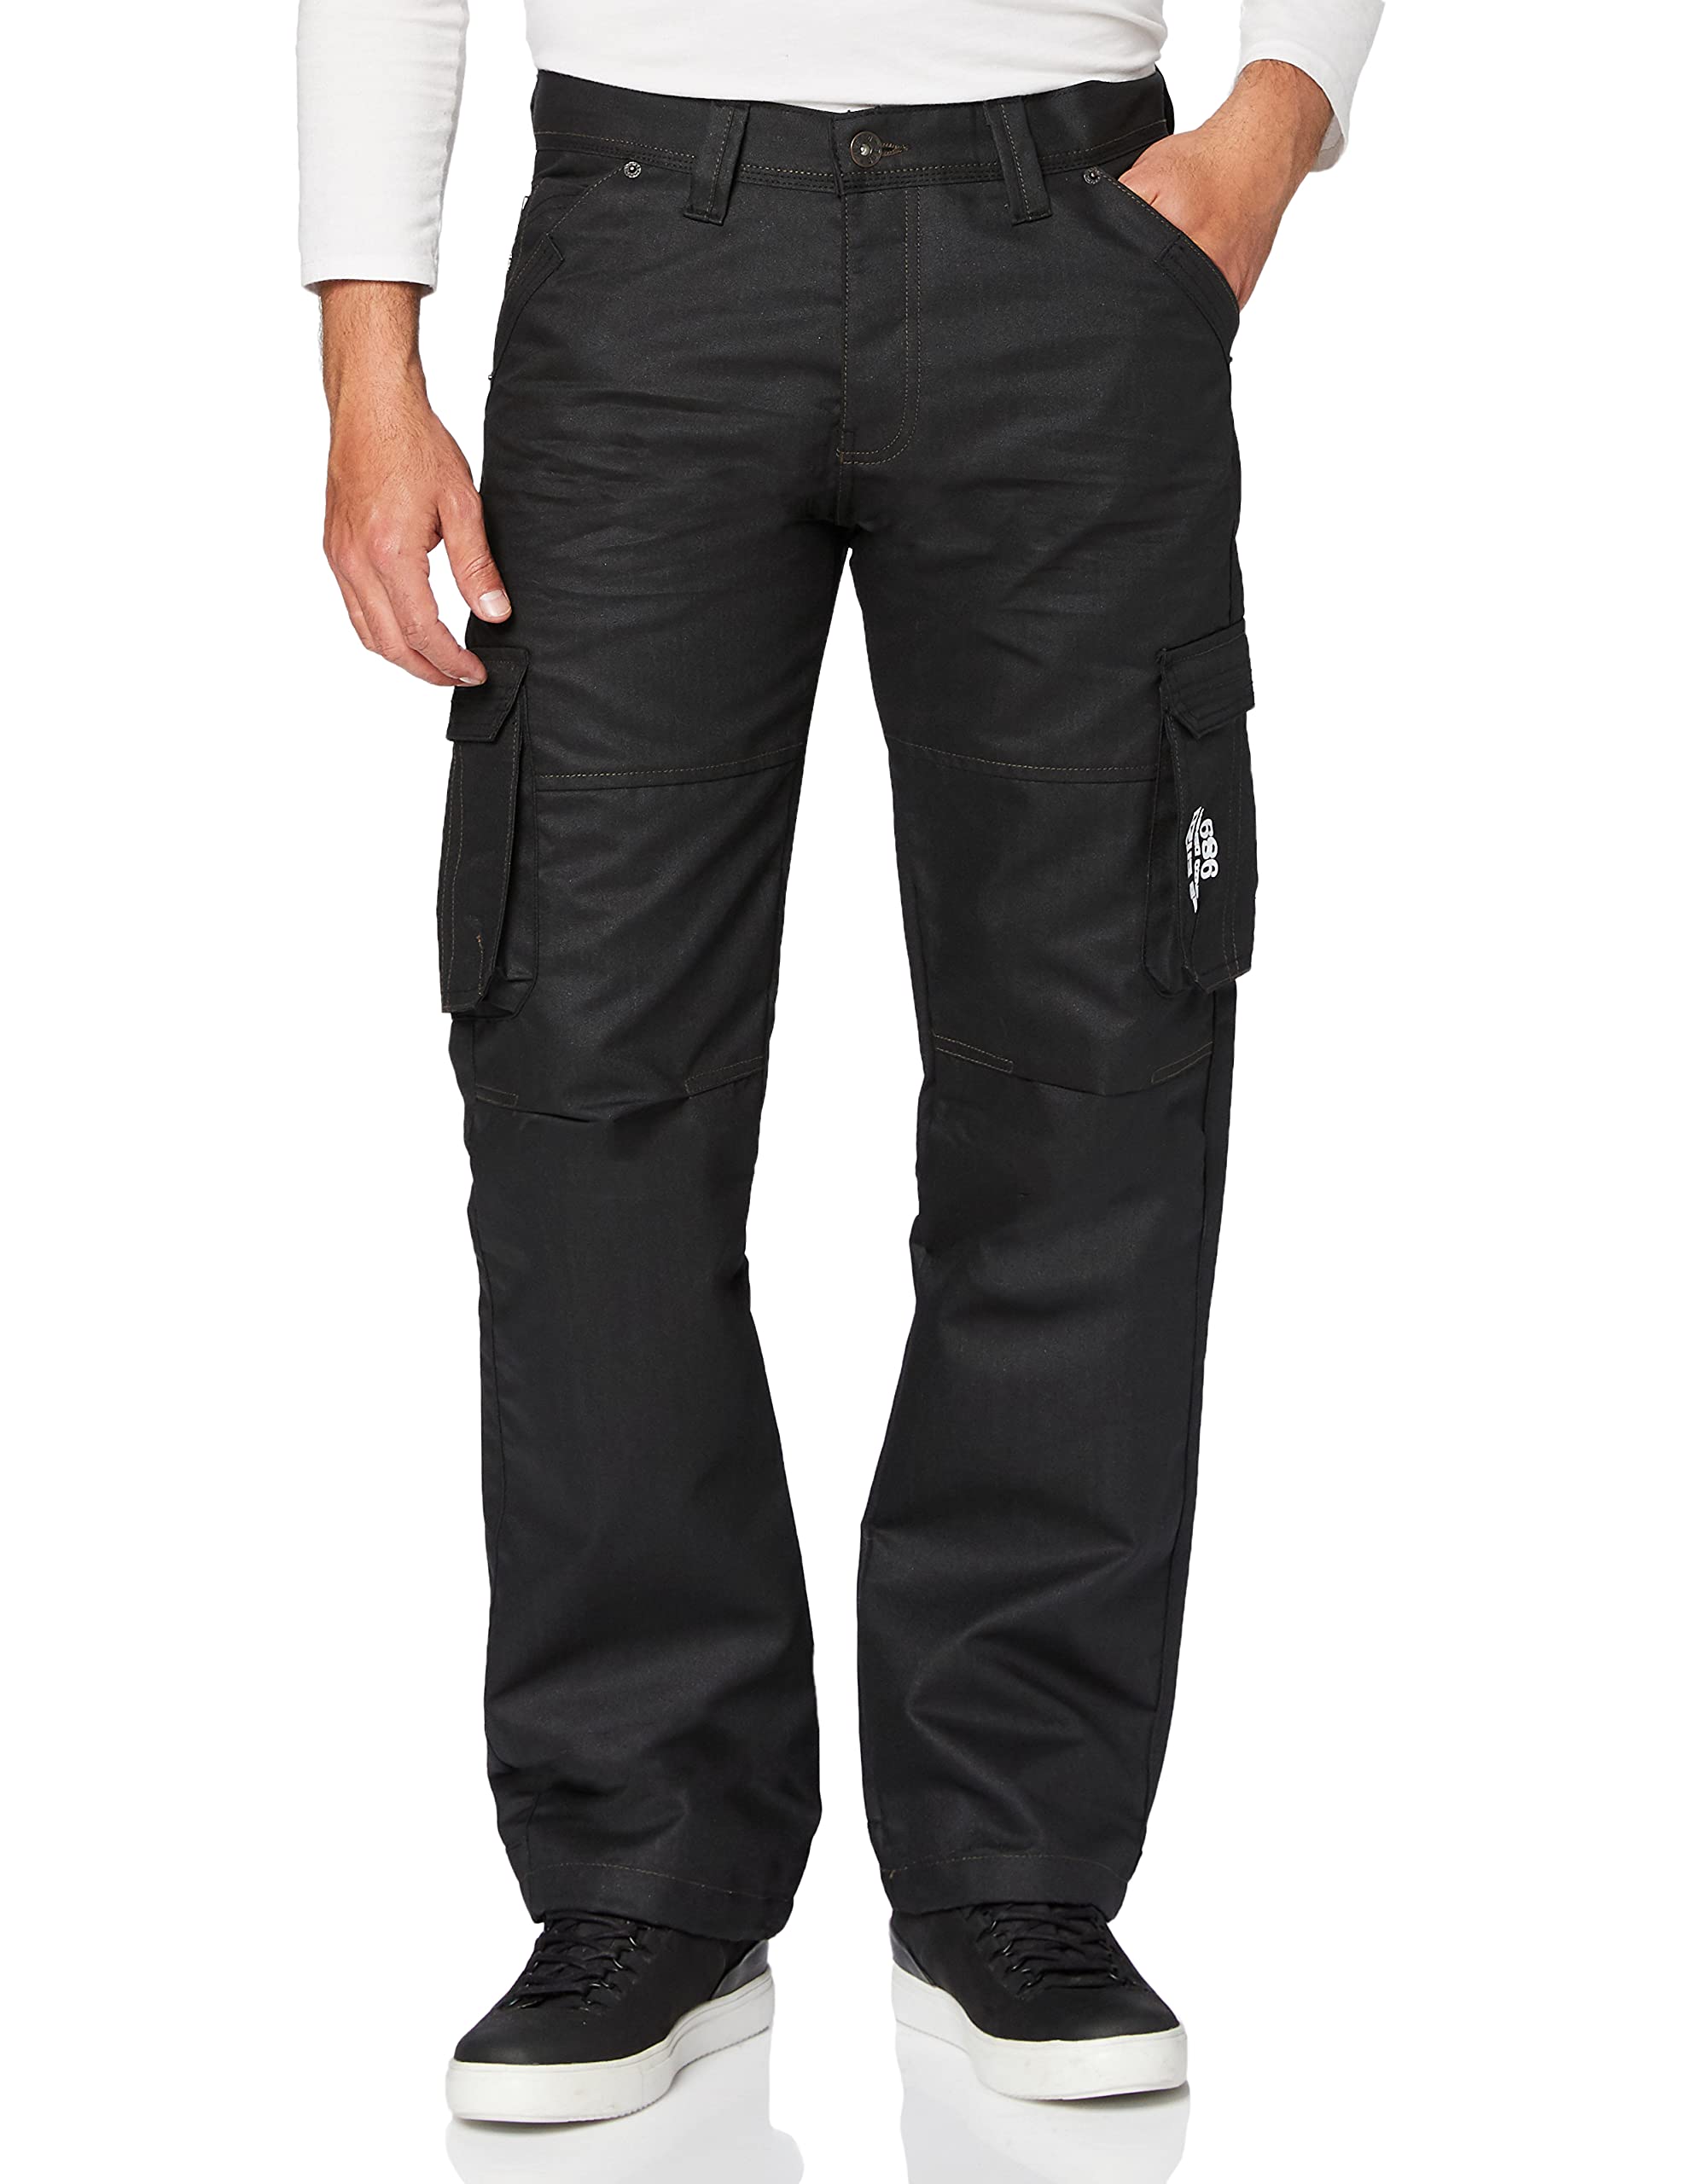 Enzo Herren Ez08 Blk Loose Fit Jeans, Schwarz (Black Black Coated), 40W / 30L